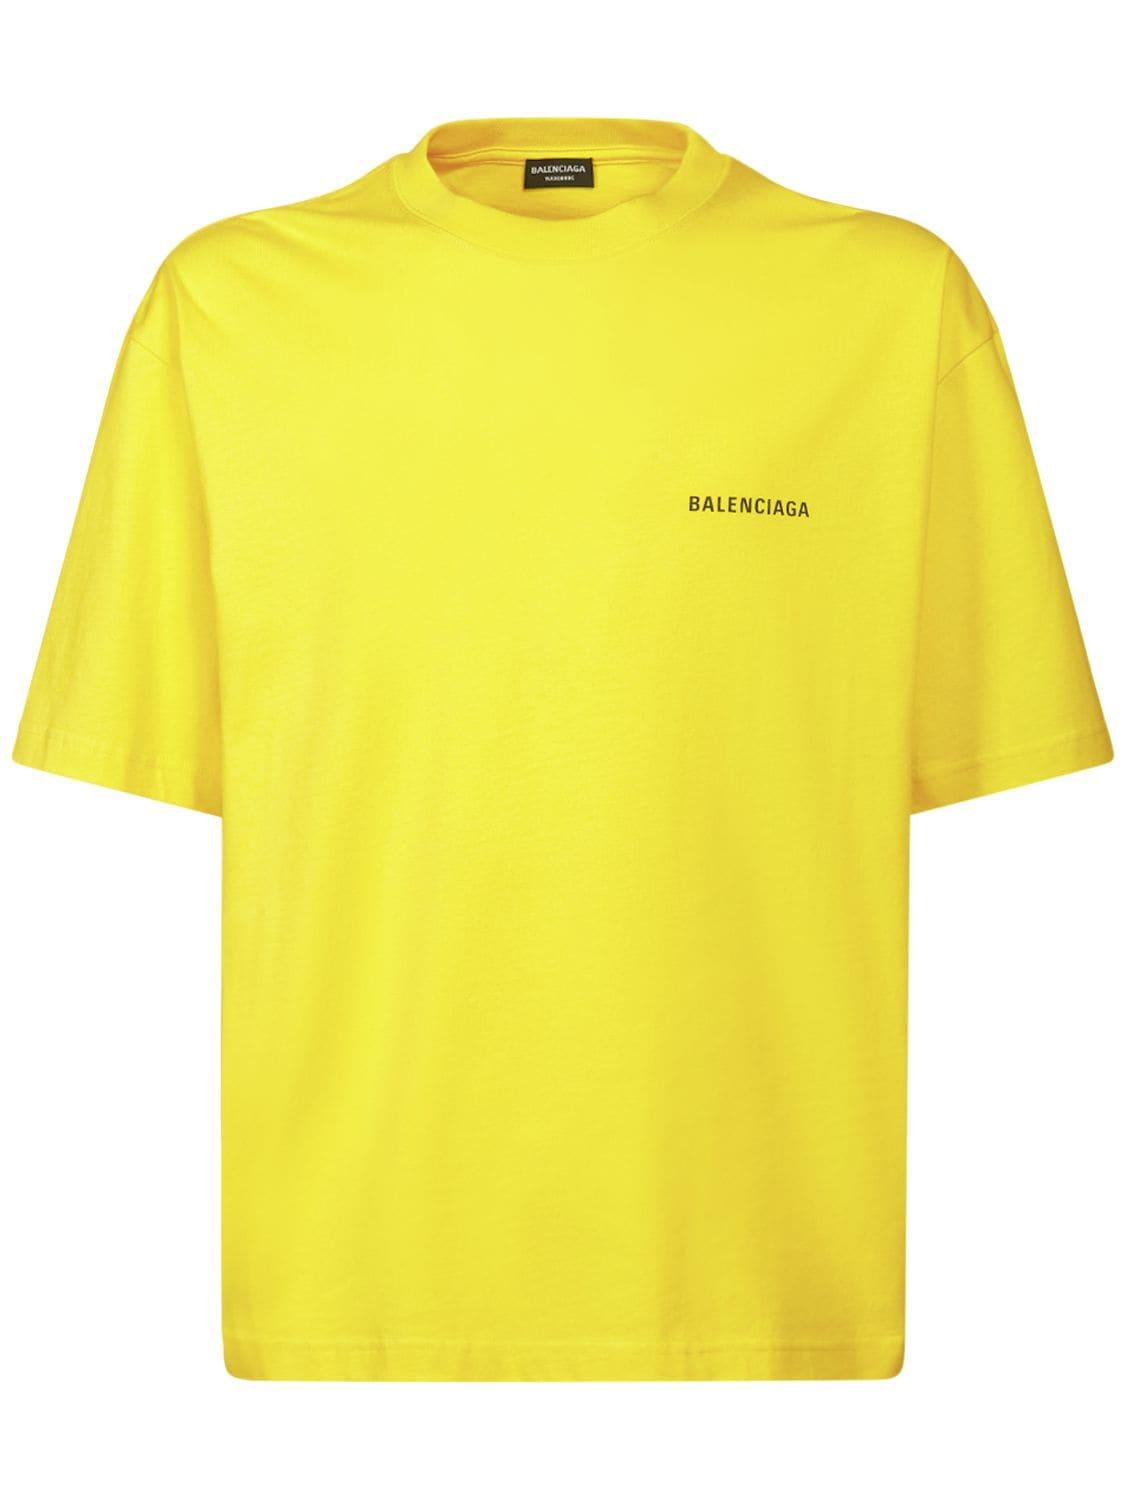 Balenciaga Logo Cotton T-shirt in Yellow for Men | Lyst